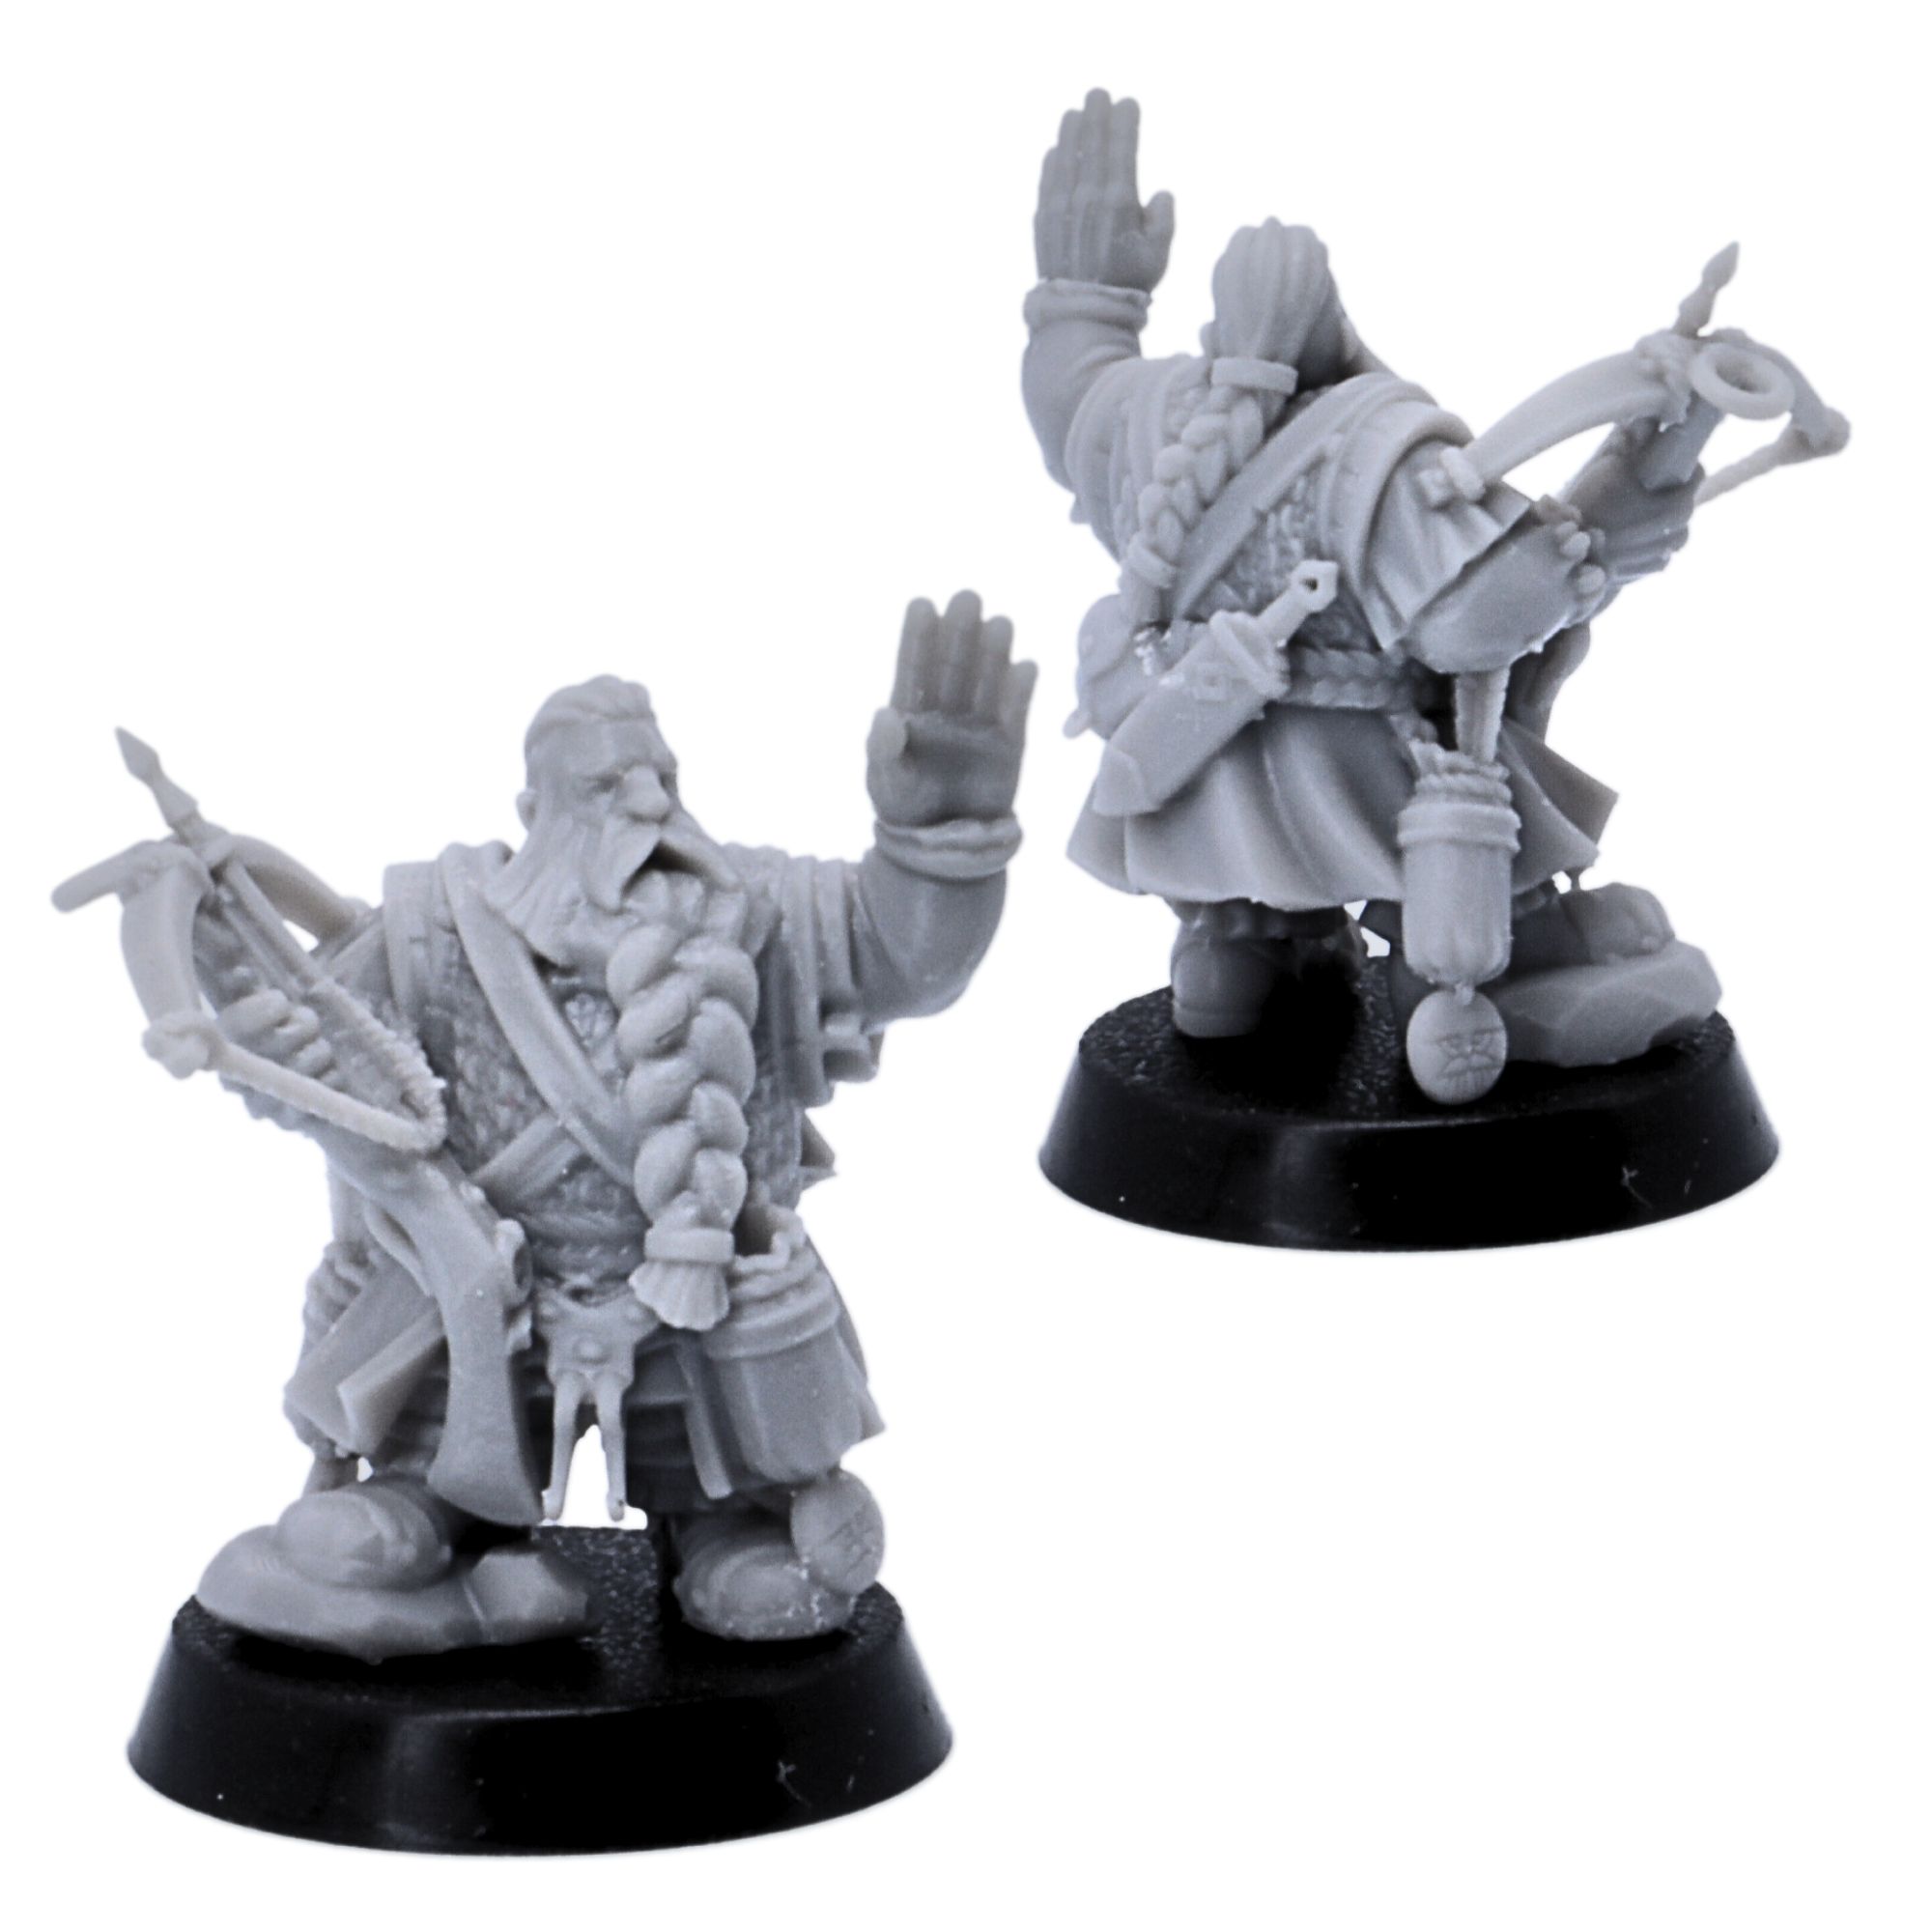 Dwarf Crossbowmen Miniature Models